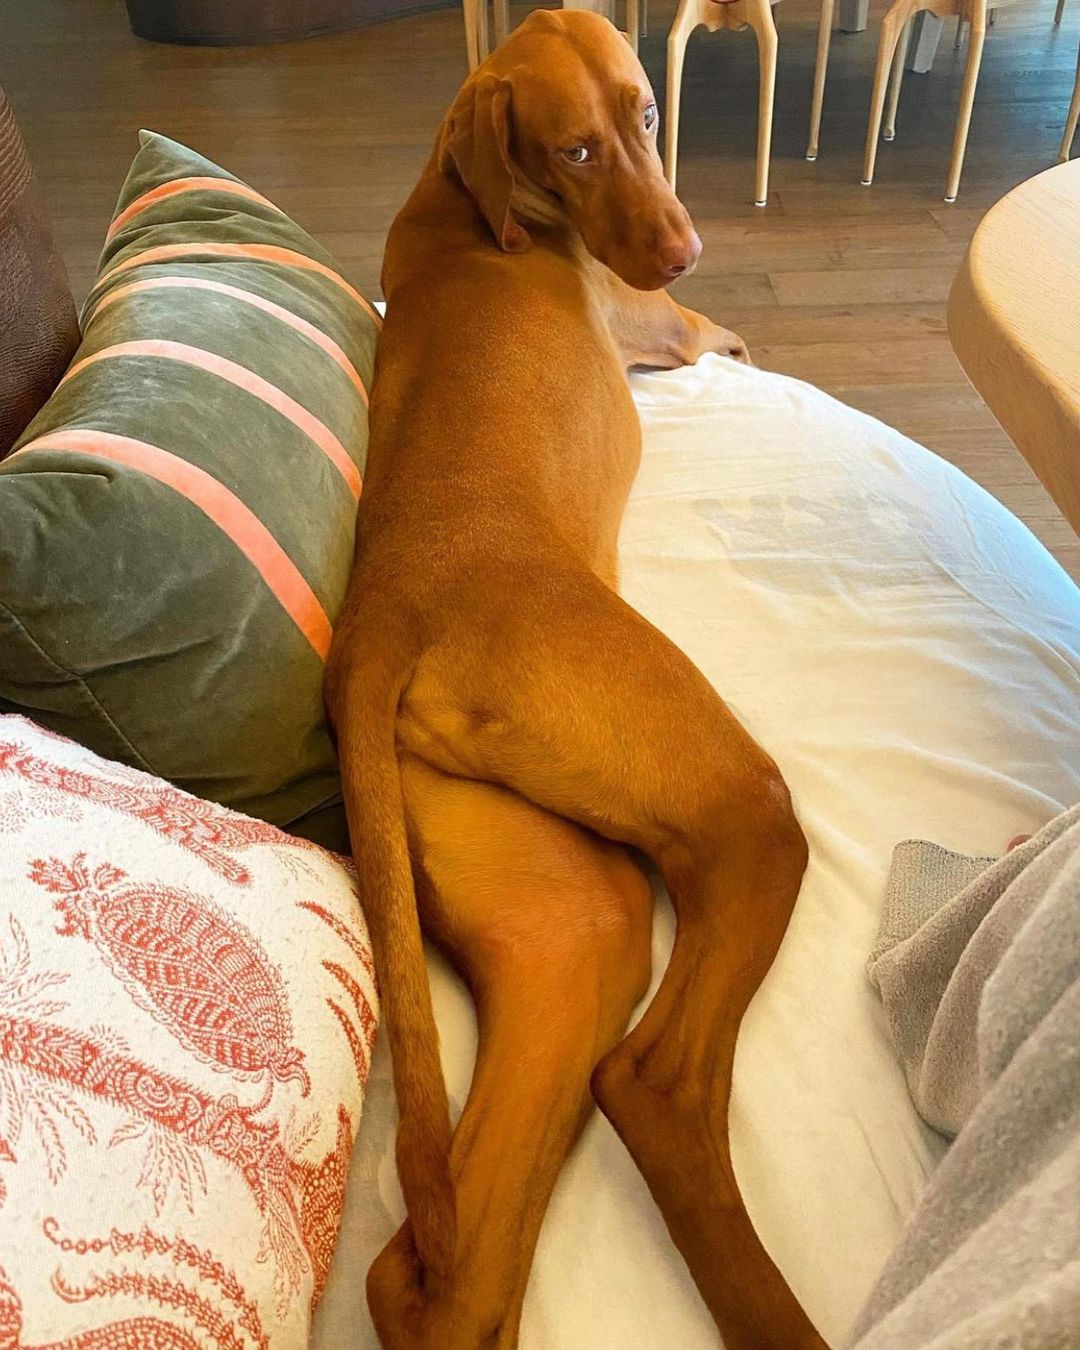 This dog has human legs